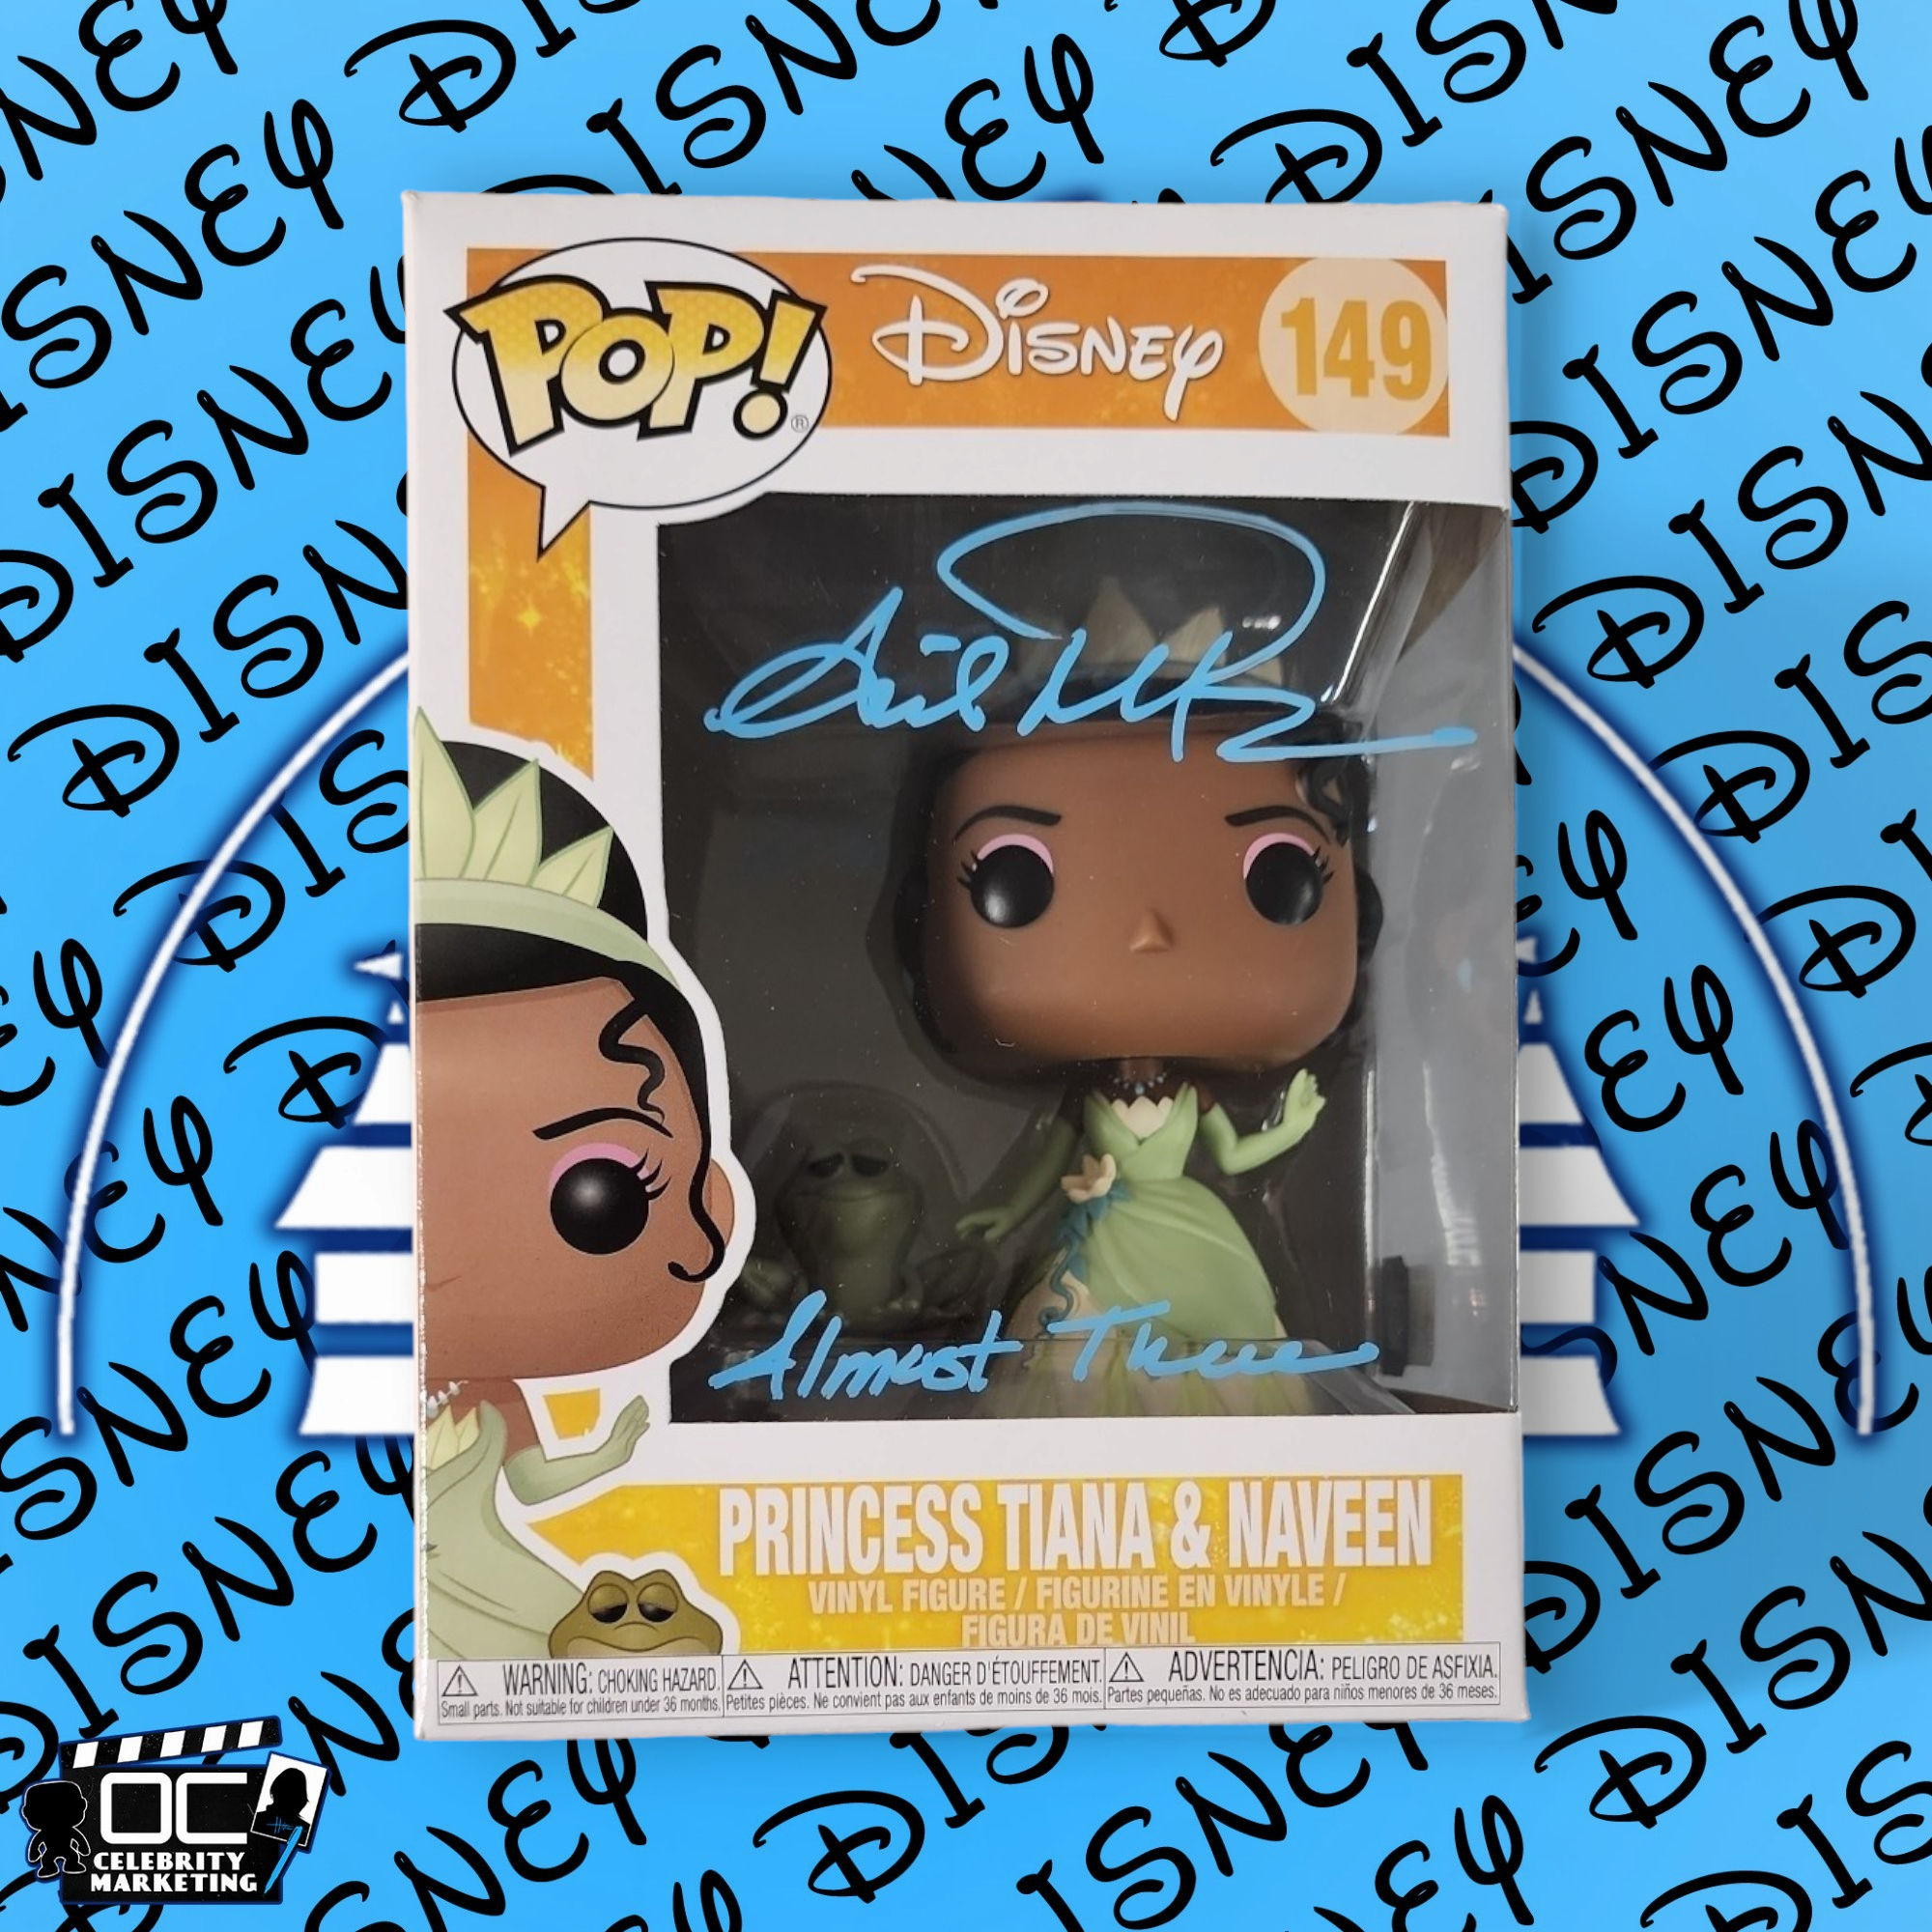 OC OCCM Tiana Funko Naveen Princess Rose & Celebrity LLC Marketing Noni Anika signed Disney – #149